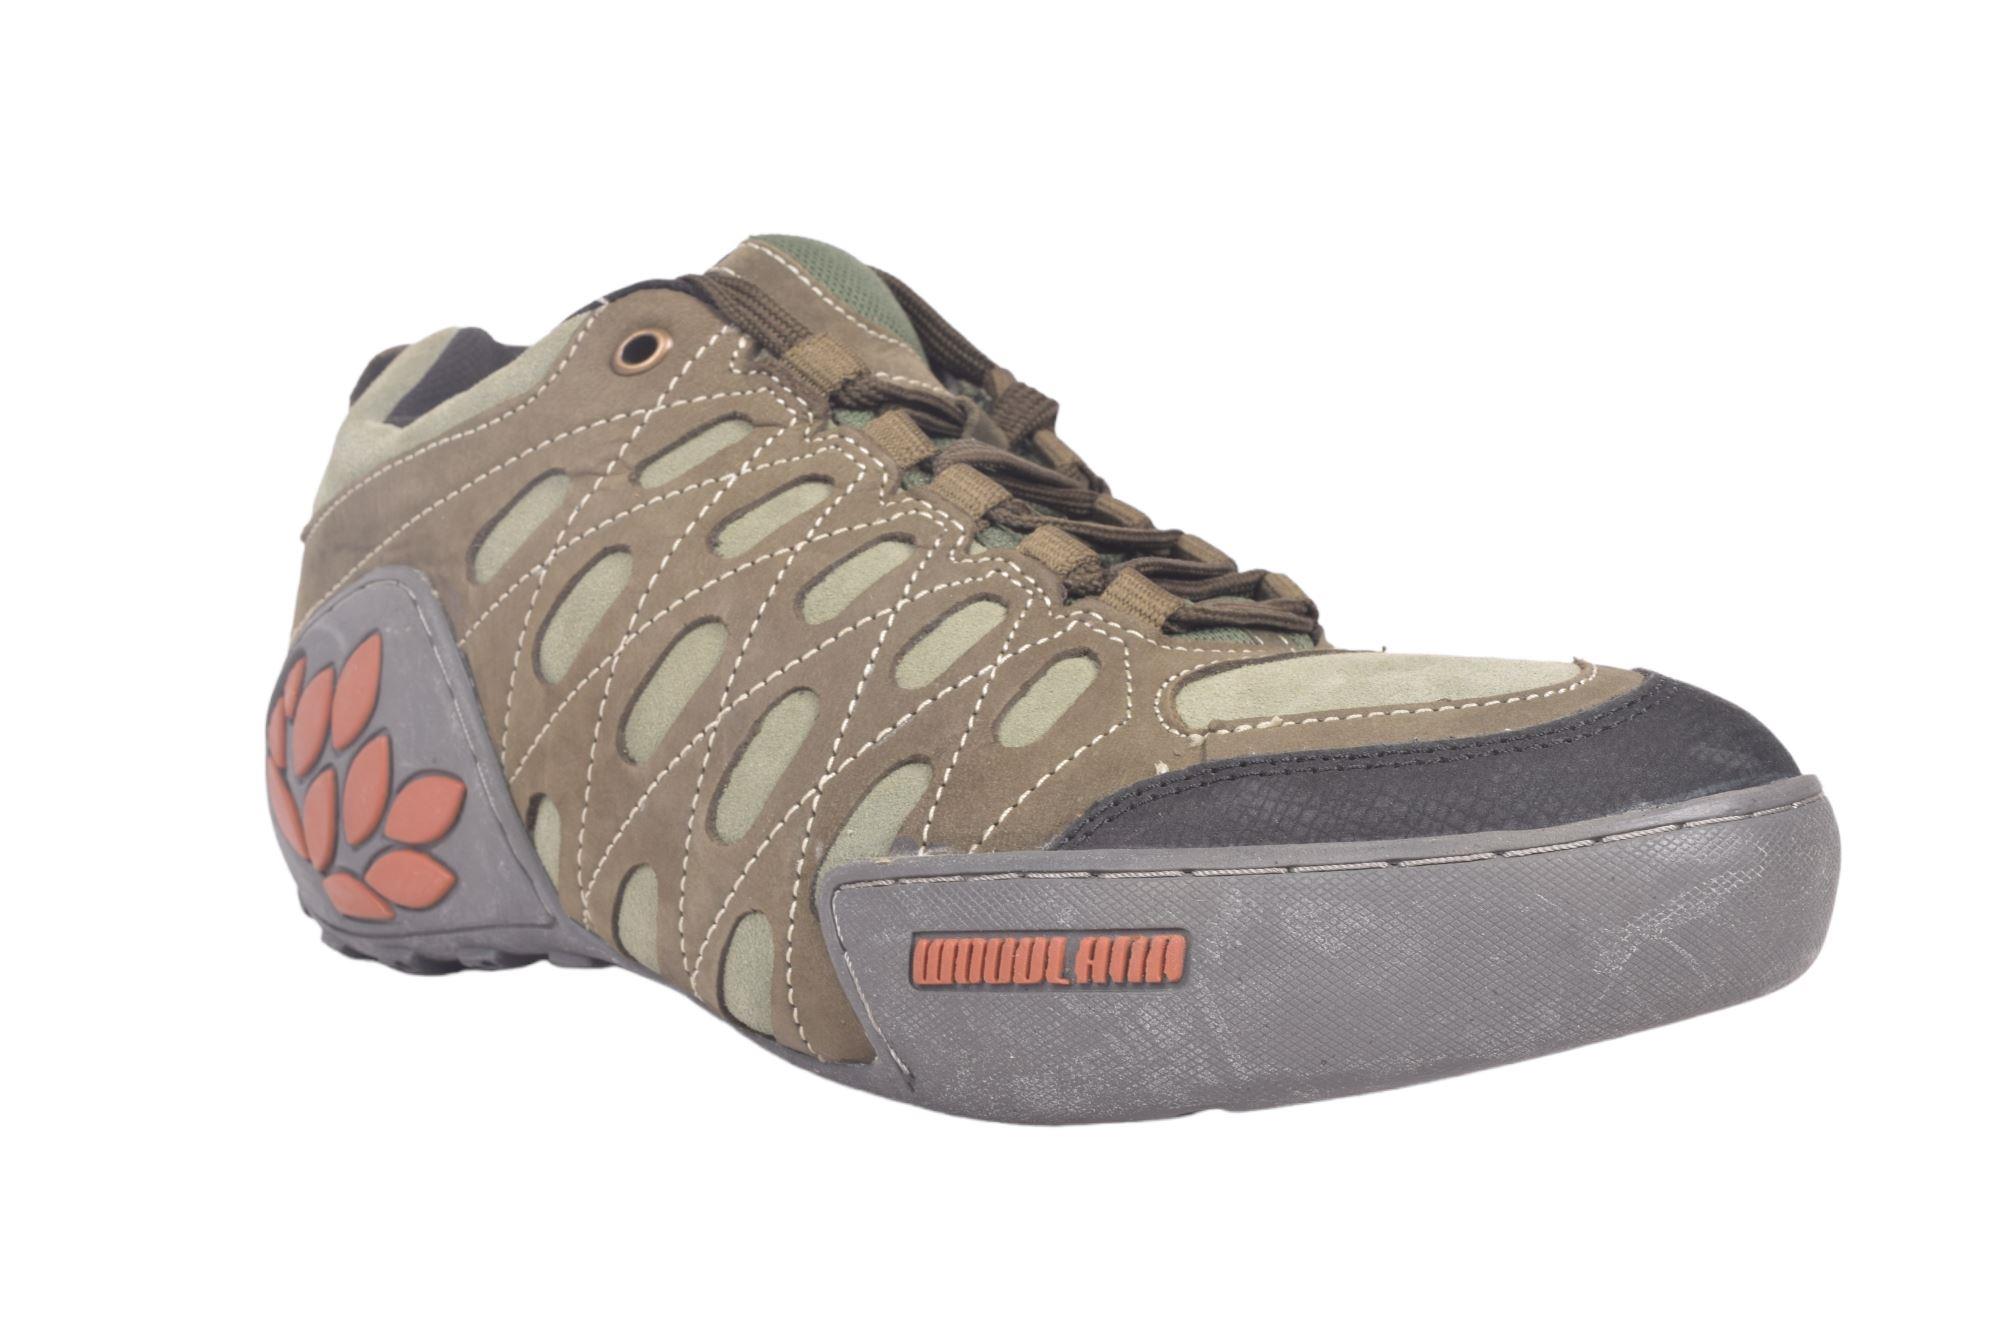 Buy Woodland Footwear online - Men - 584 products | FASHIOLA.in